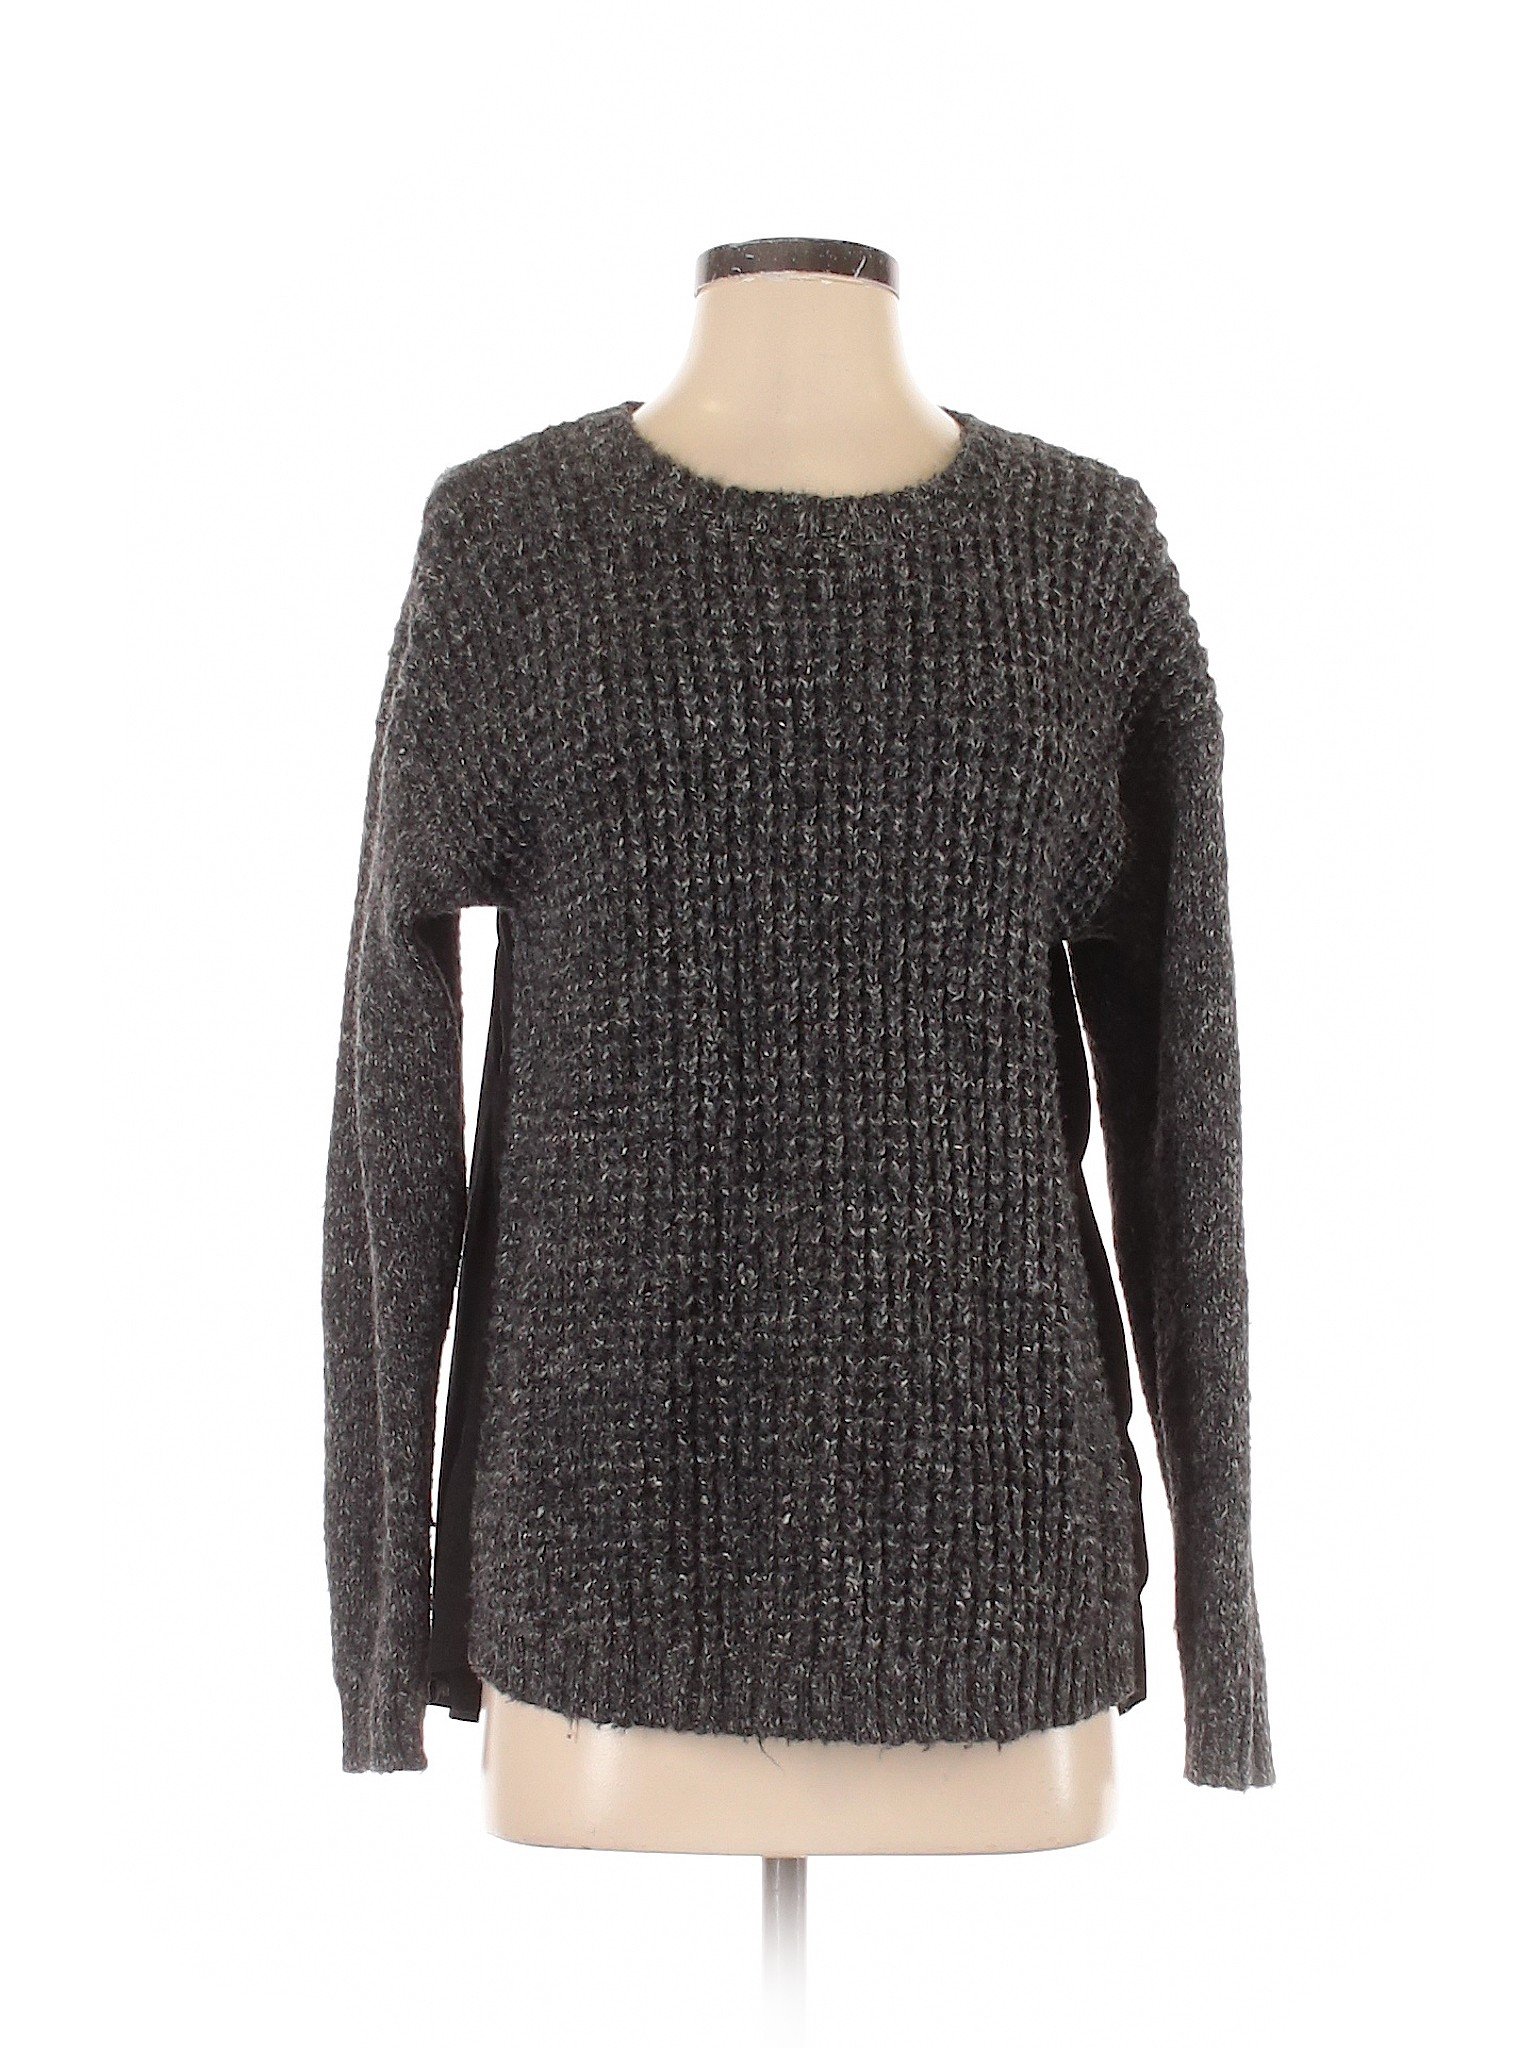 Kensie Women Gray Pullover Sweater S | eBay